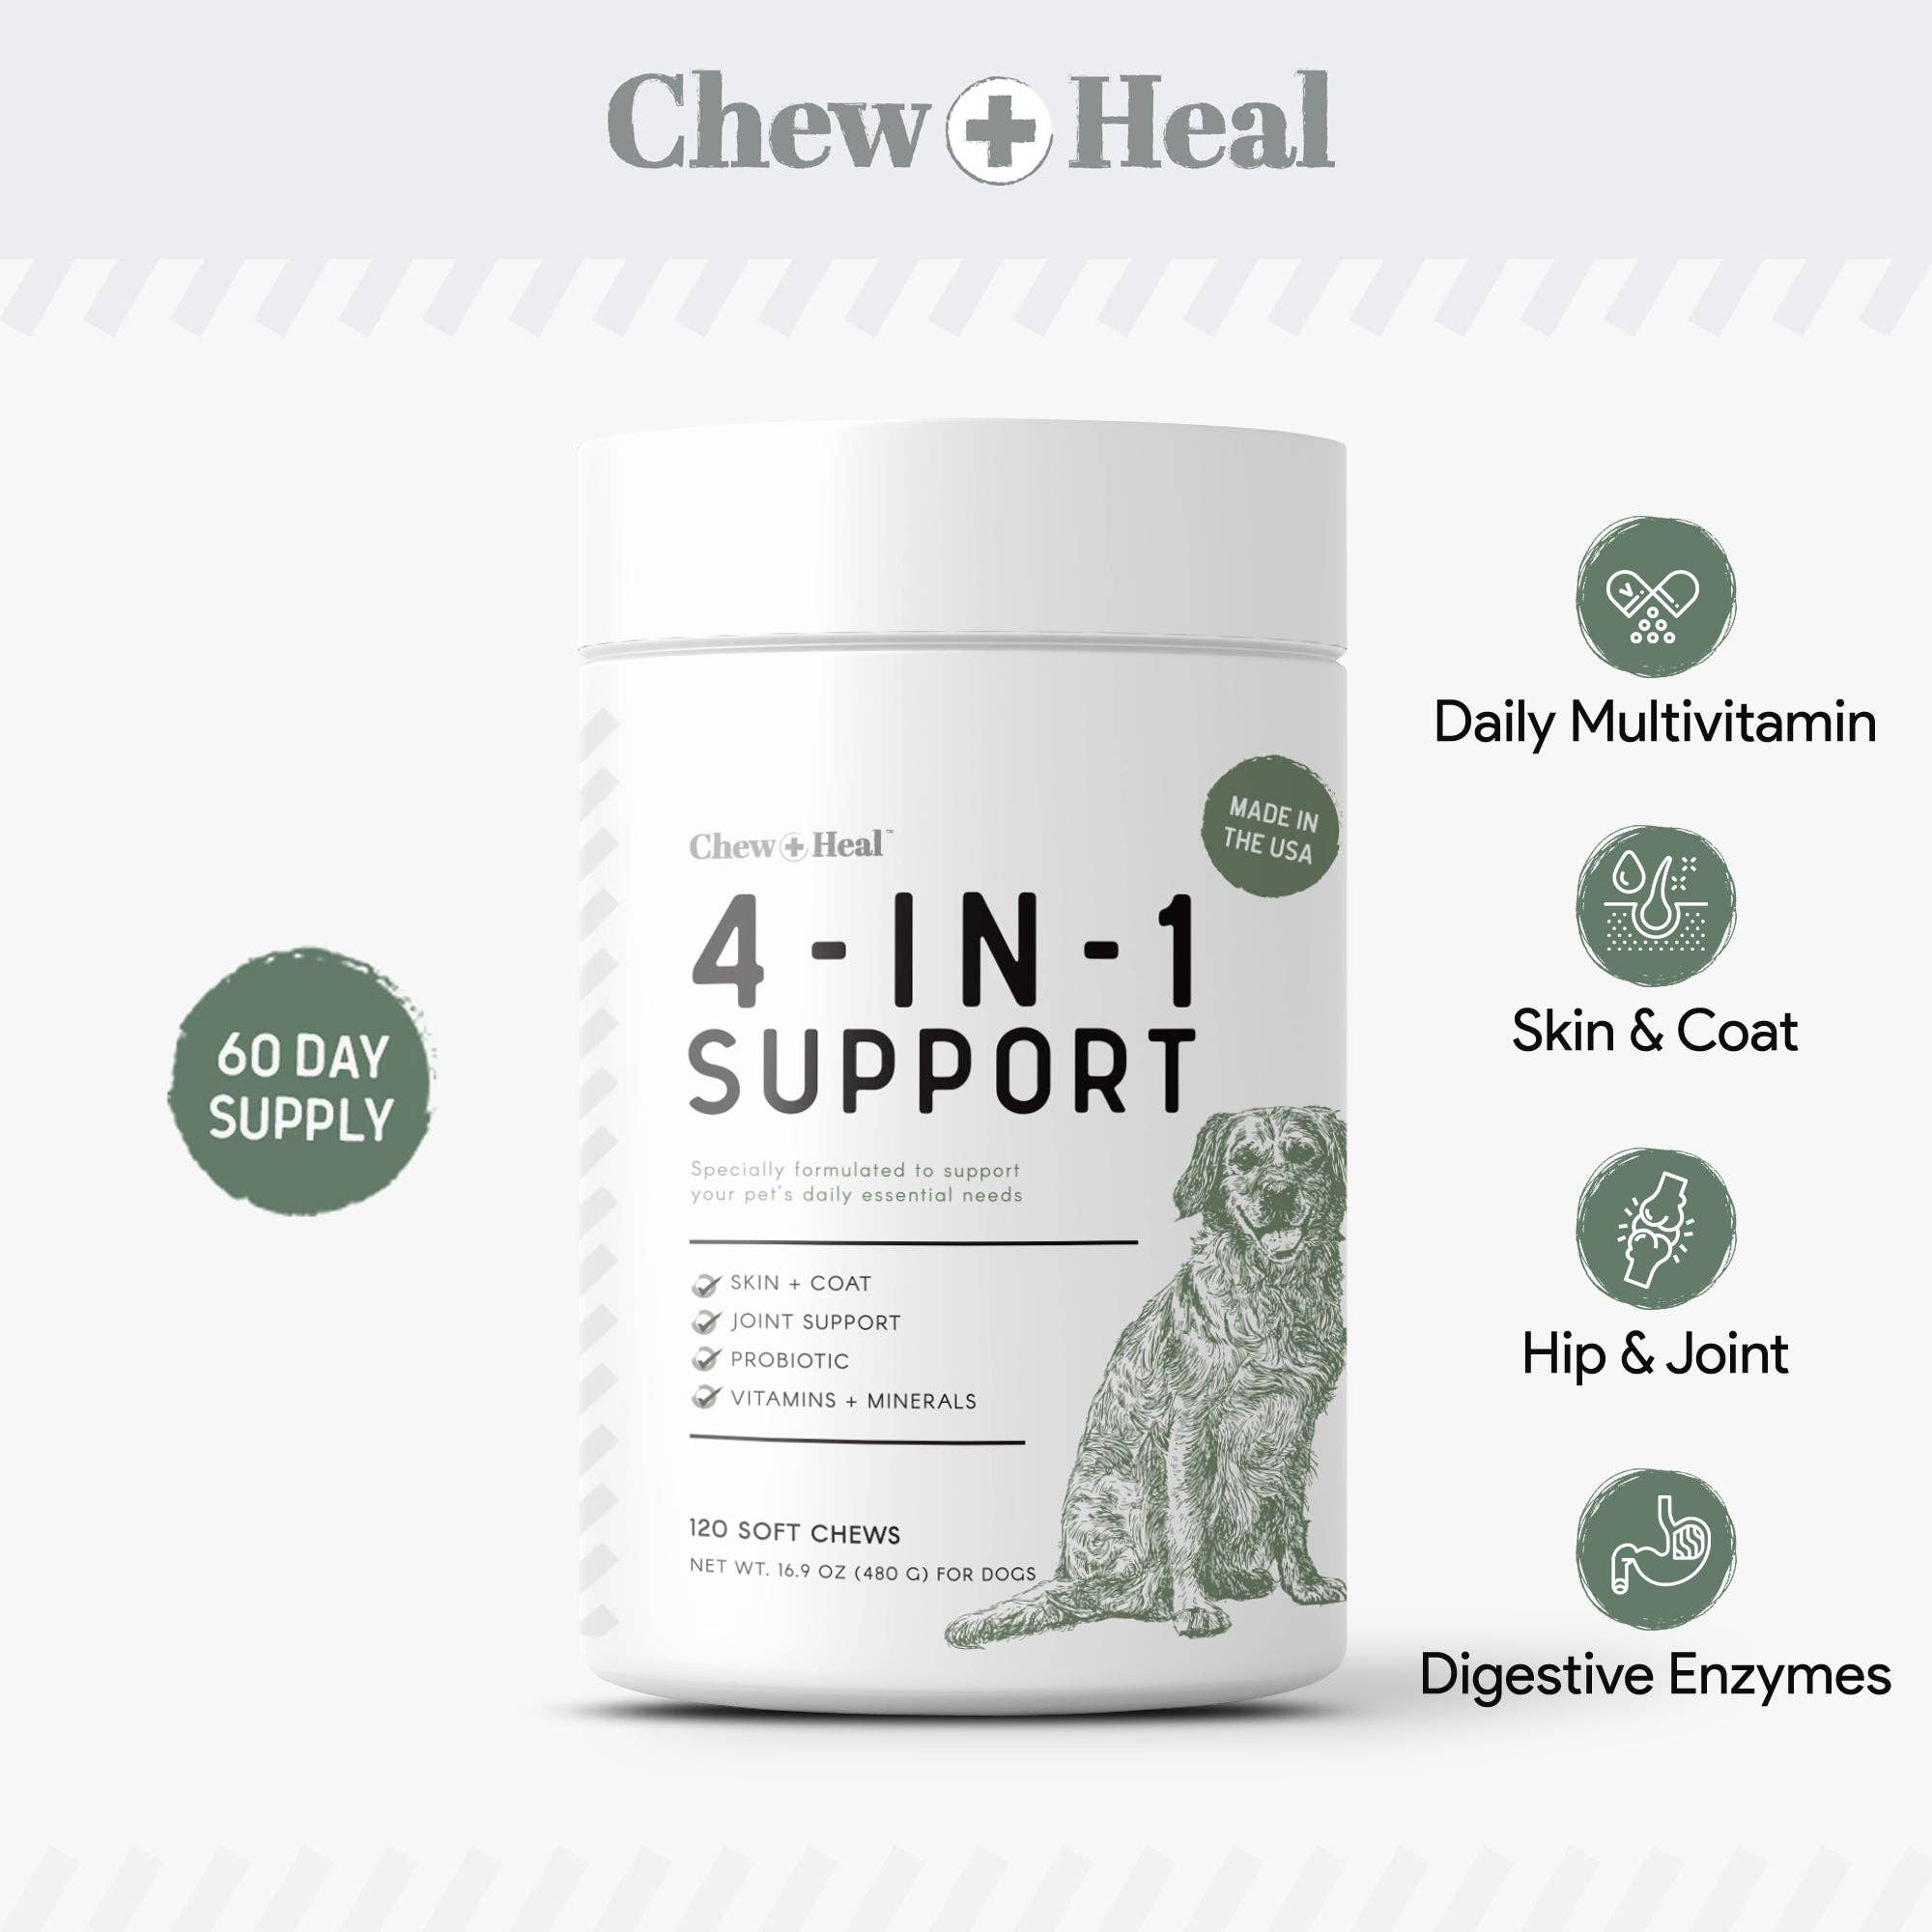 Chew + Heal 4-IN-1 Support Supplement